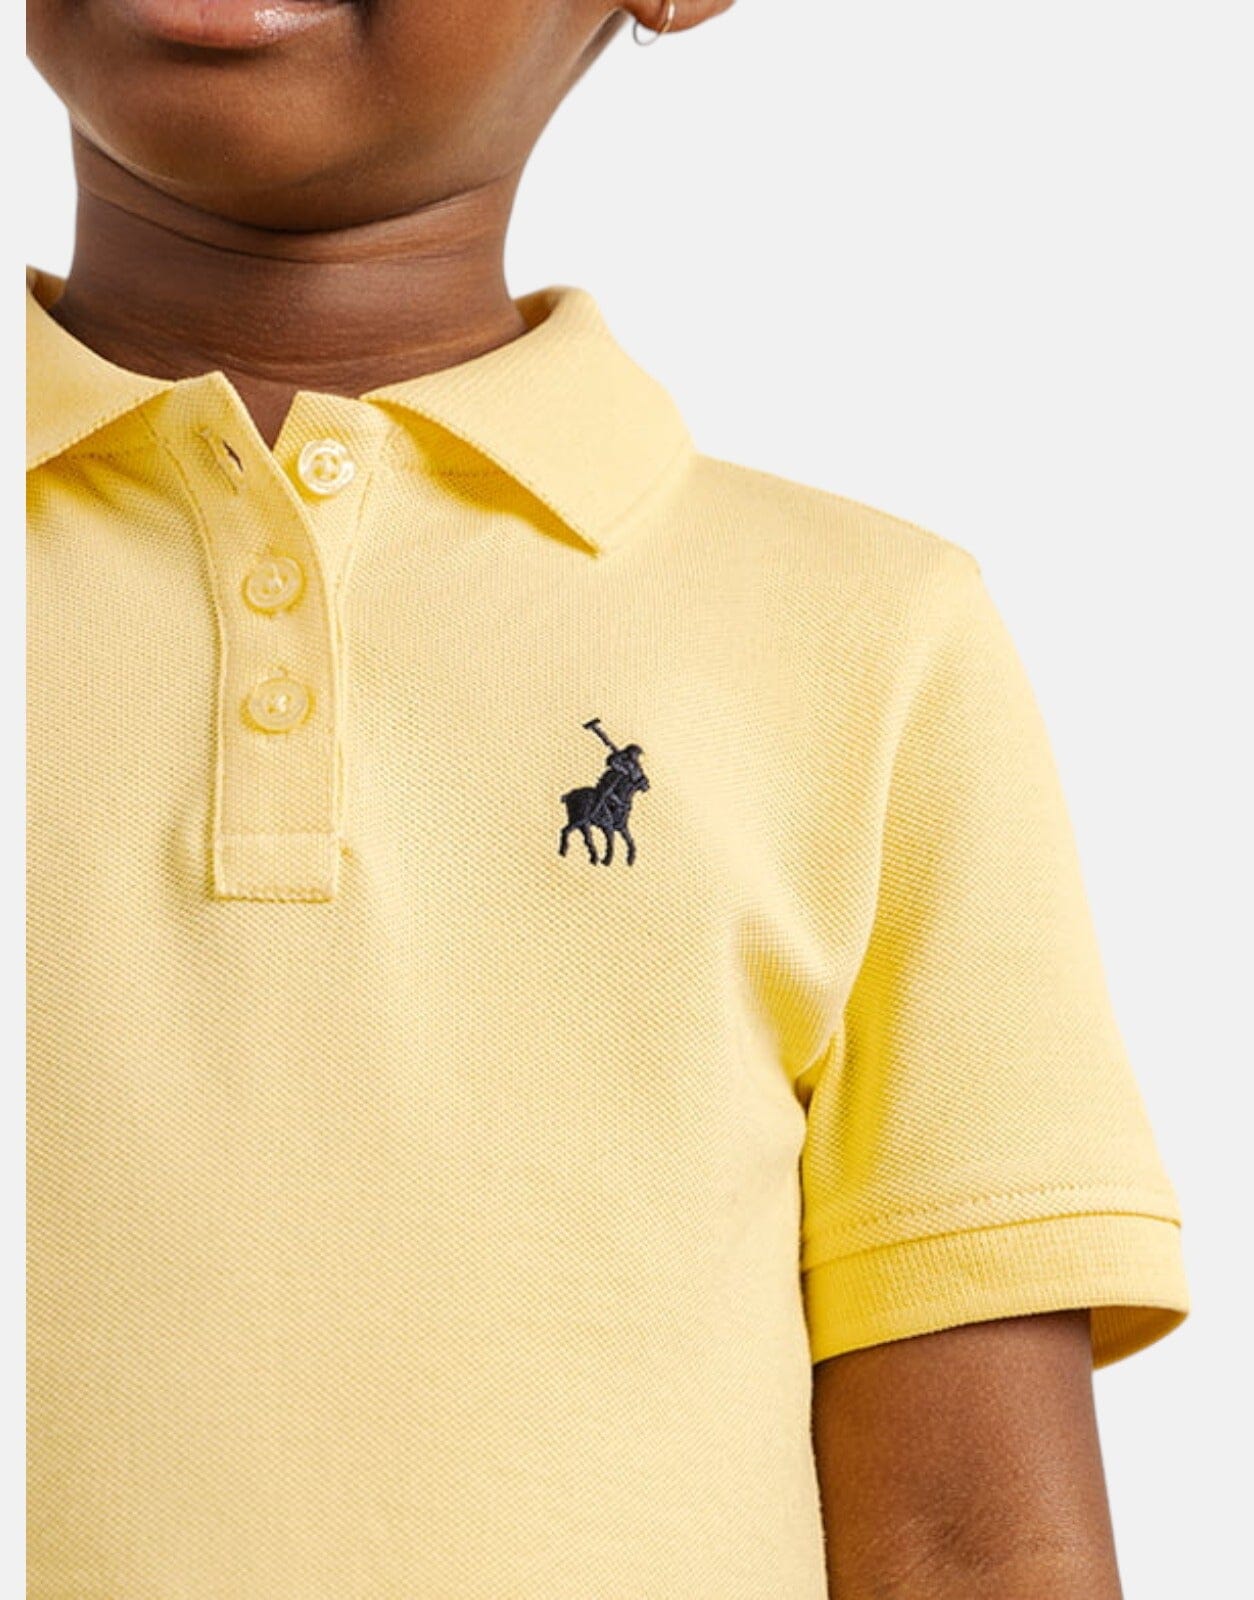 Polo Girls Dakota Golfer Dress Yellow - Subwear